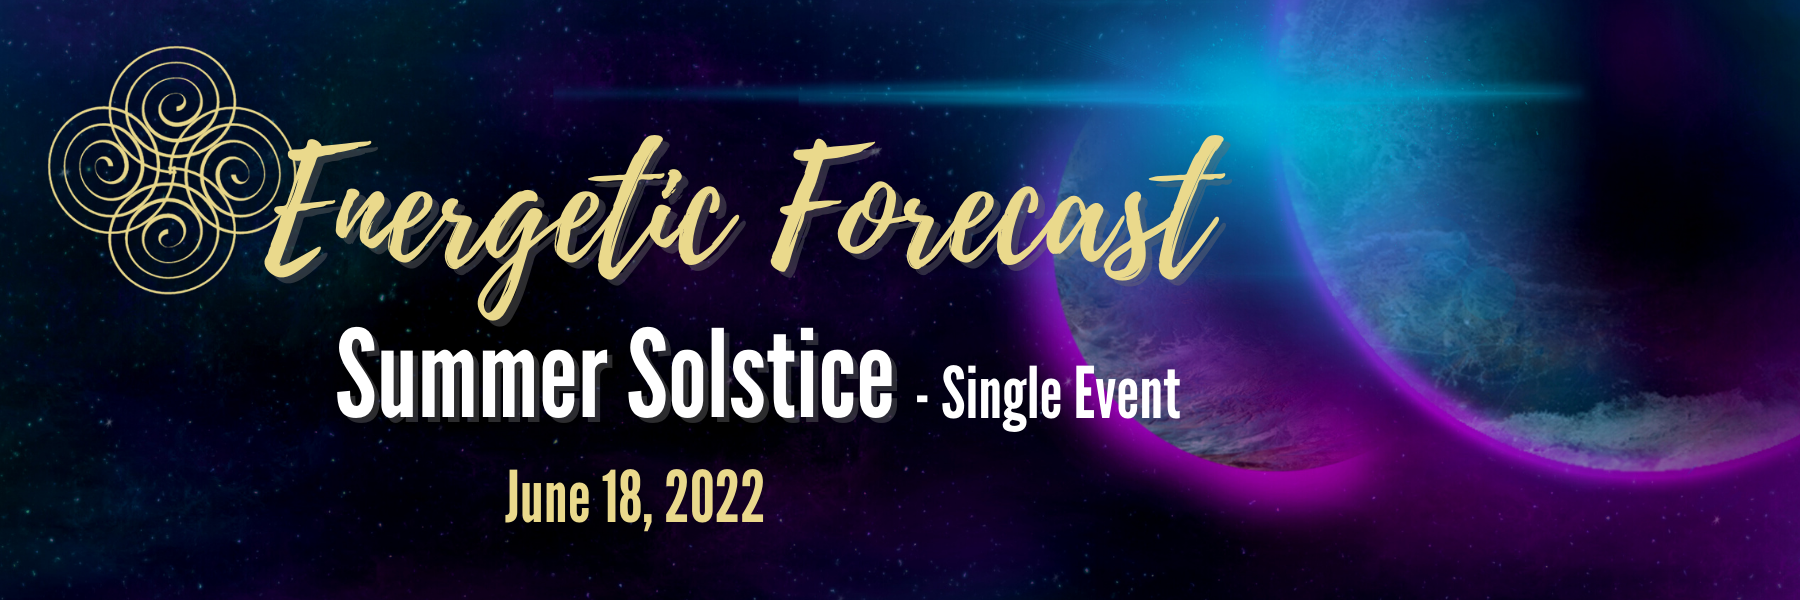 Energetic Forecast - Summer Solstice 2022 - Single Event